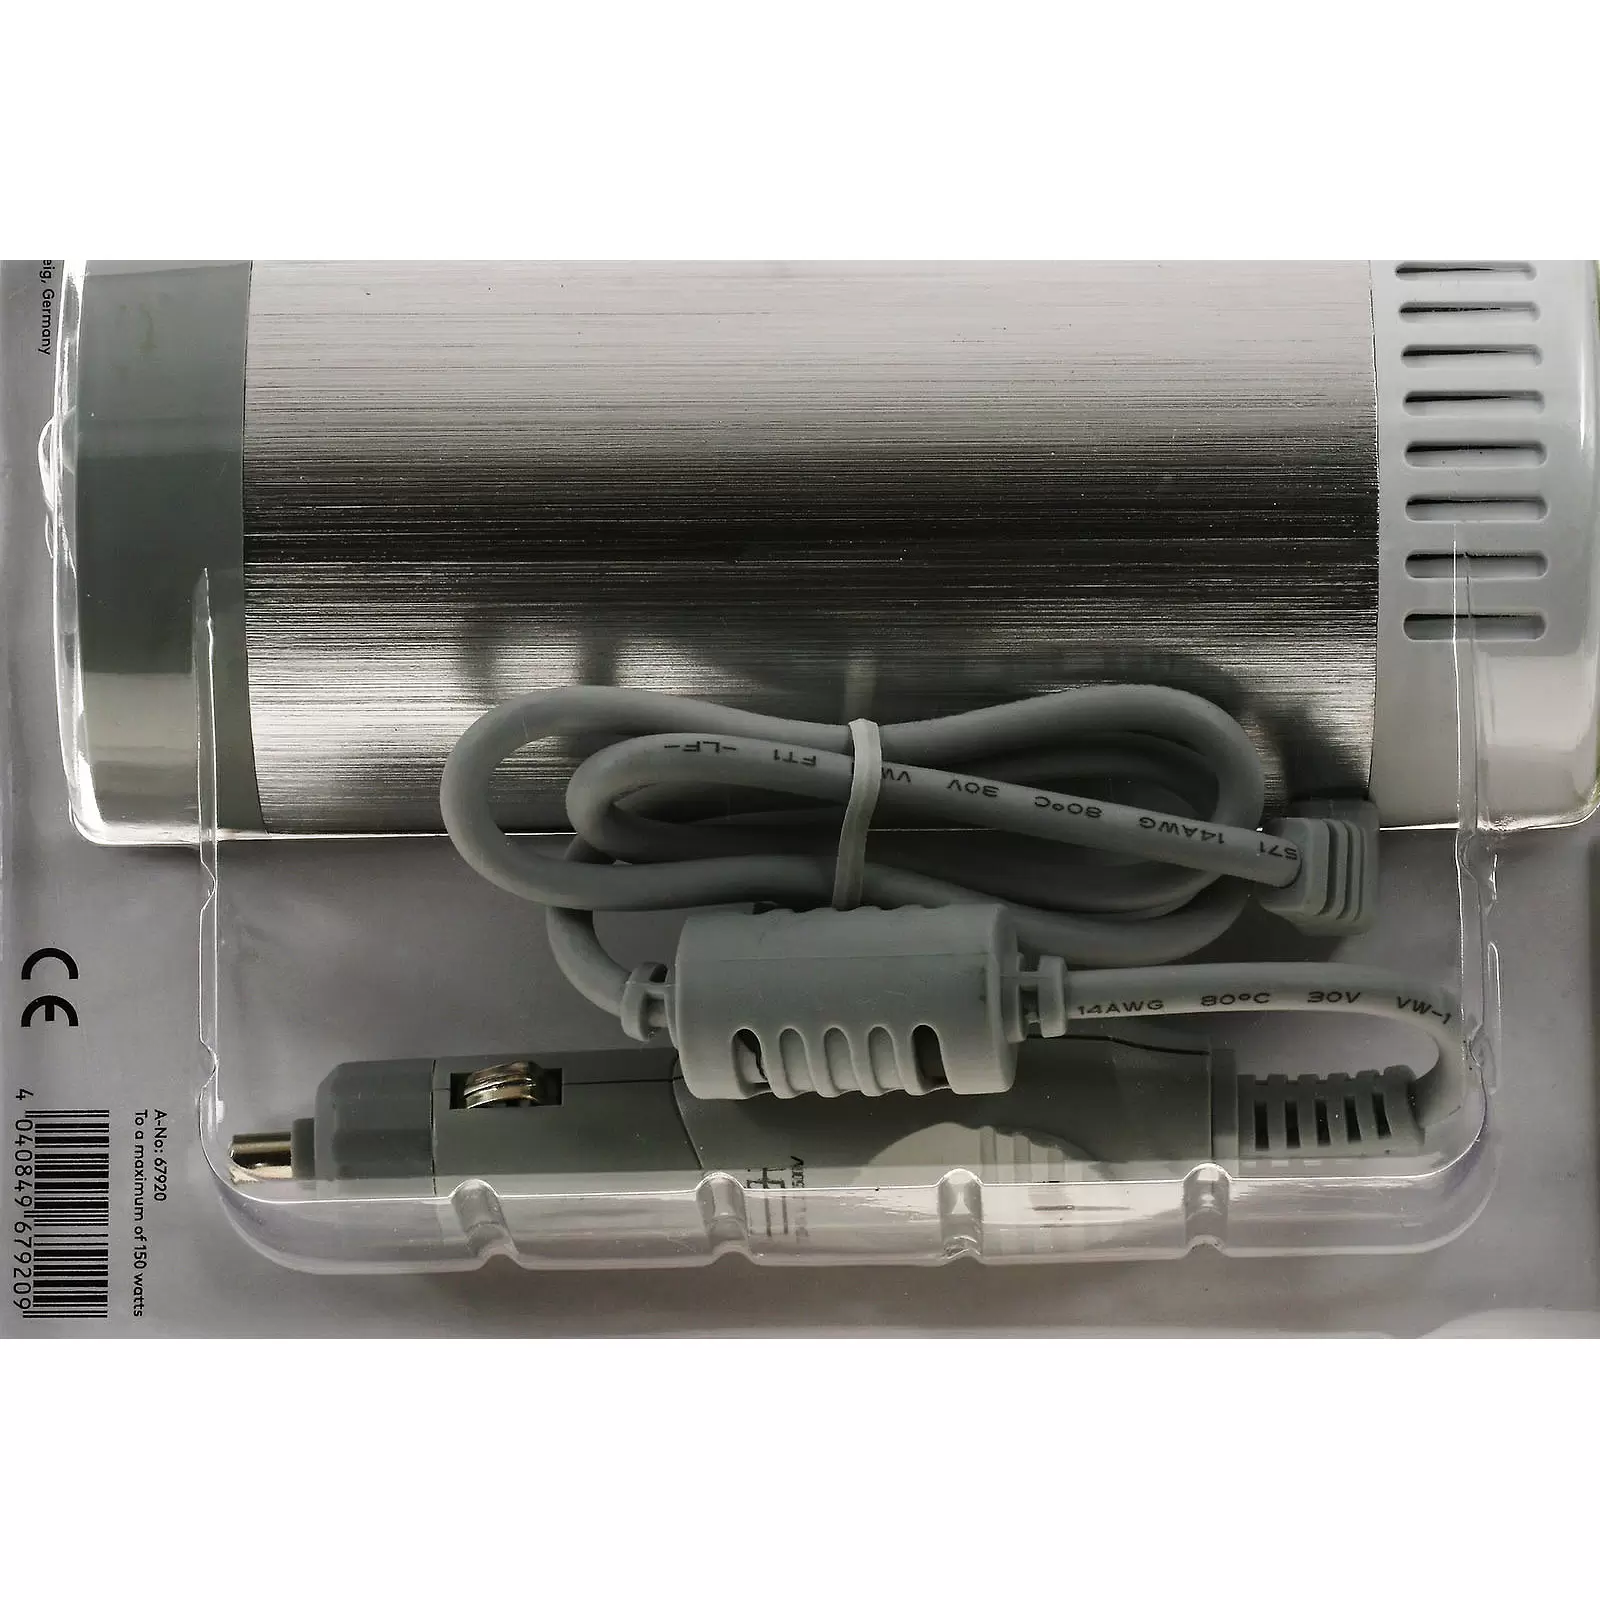 Kfz-Inverter/ Spannungswandler 2in1 12V DC in 230V AC, inkl. USB (5V 2,4A)